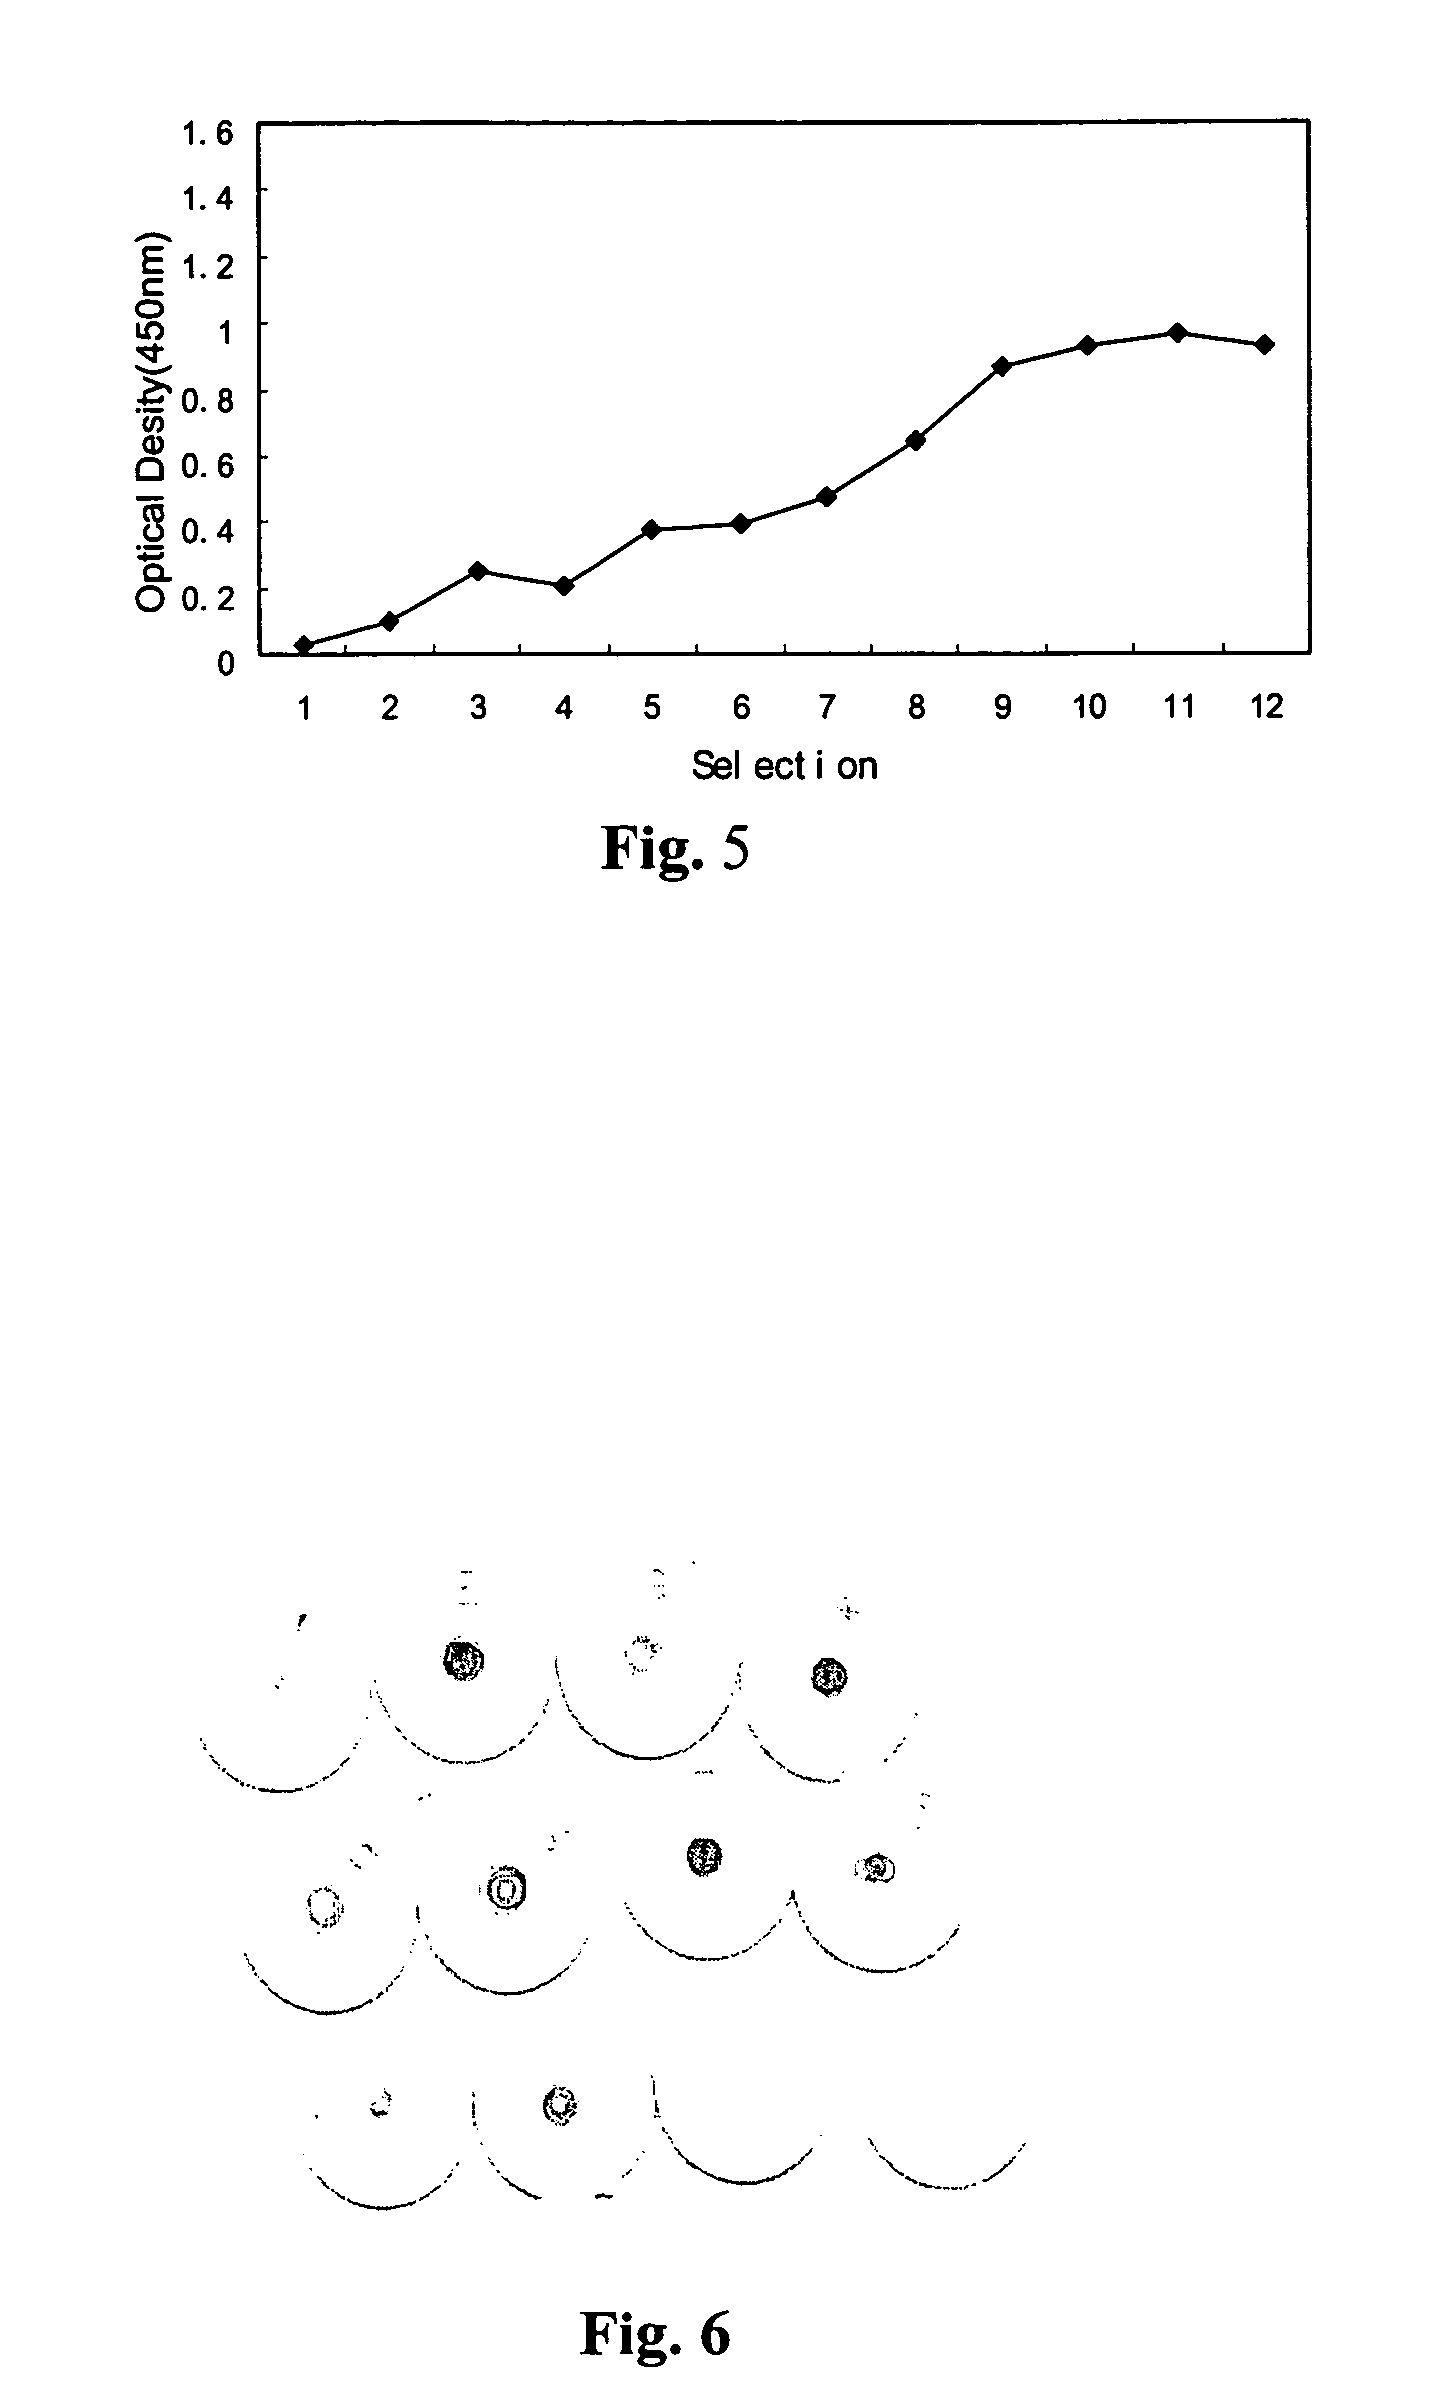 Oligonucleotide antagonist for human tumor necrosis factor alpha (TNF-alpha)